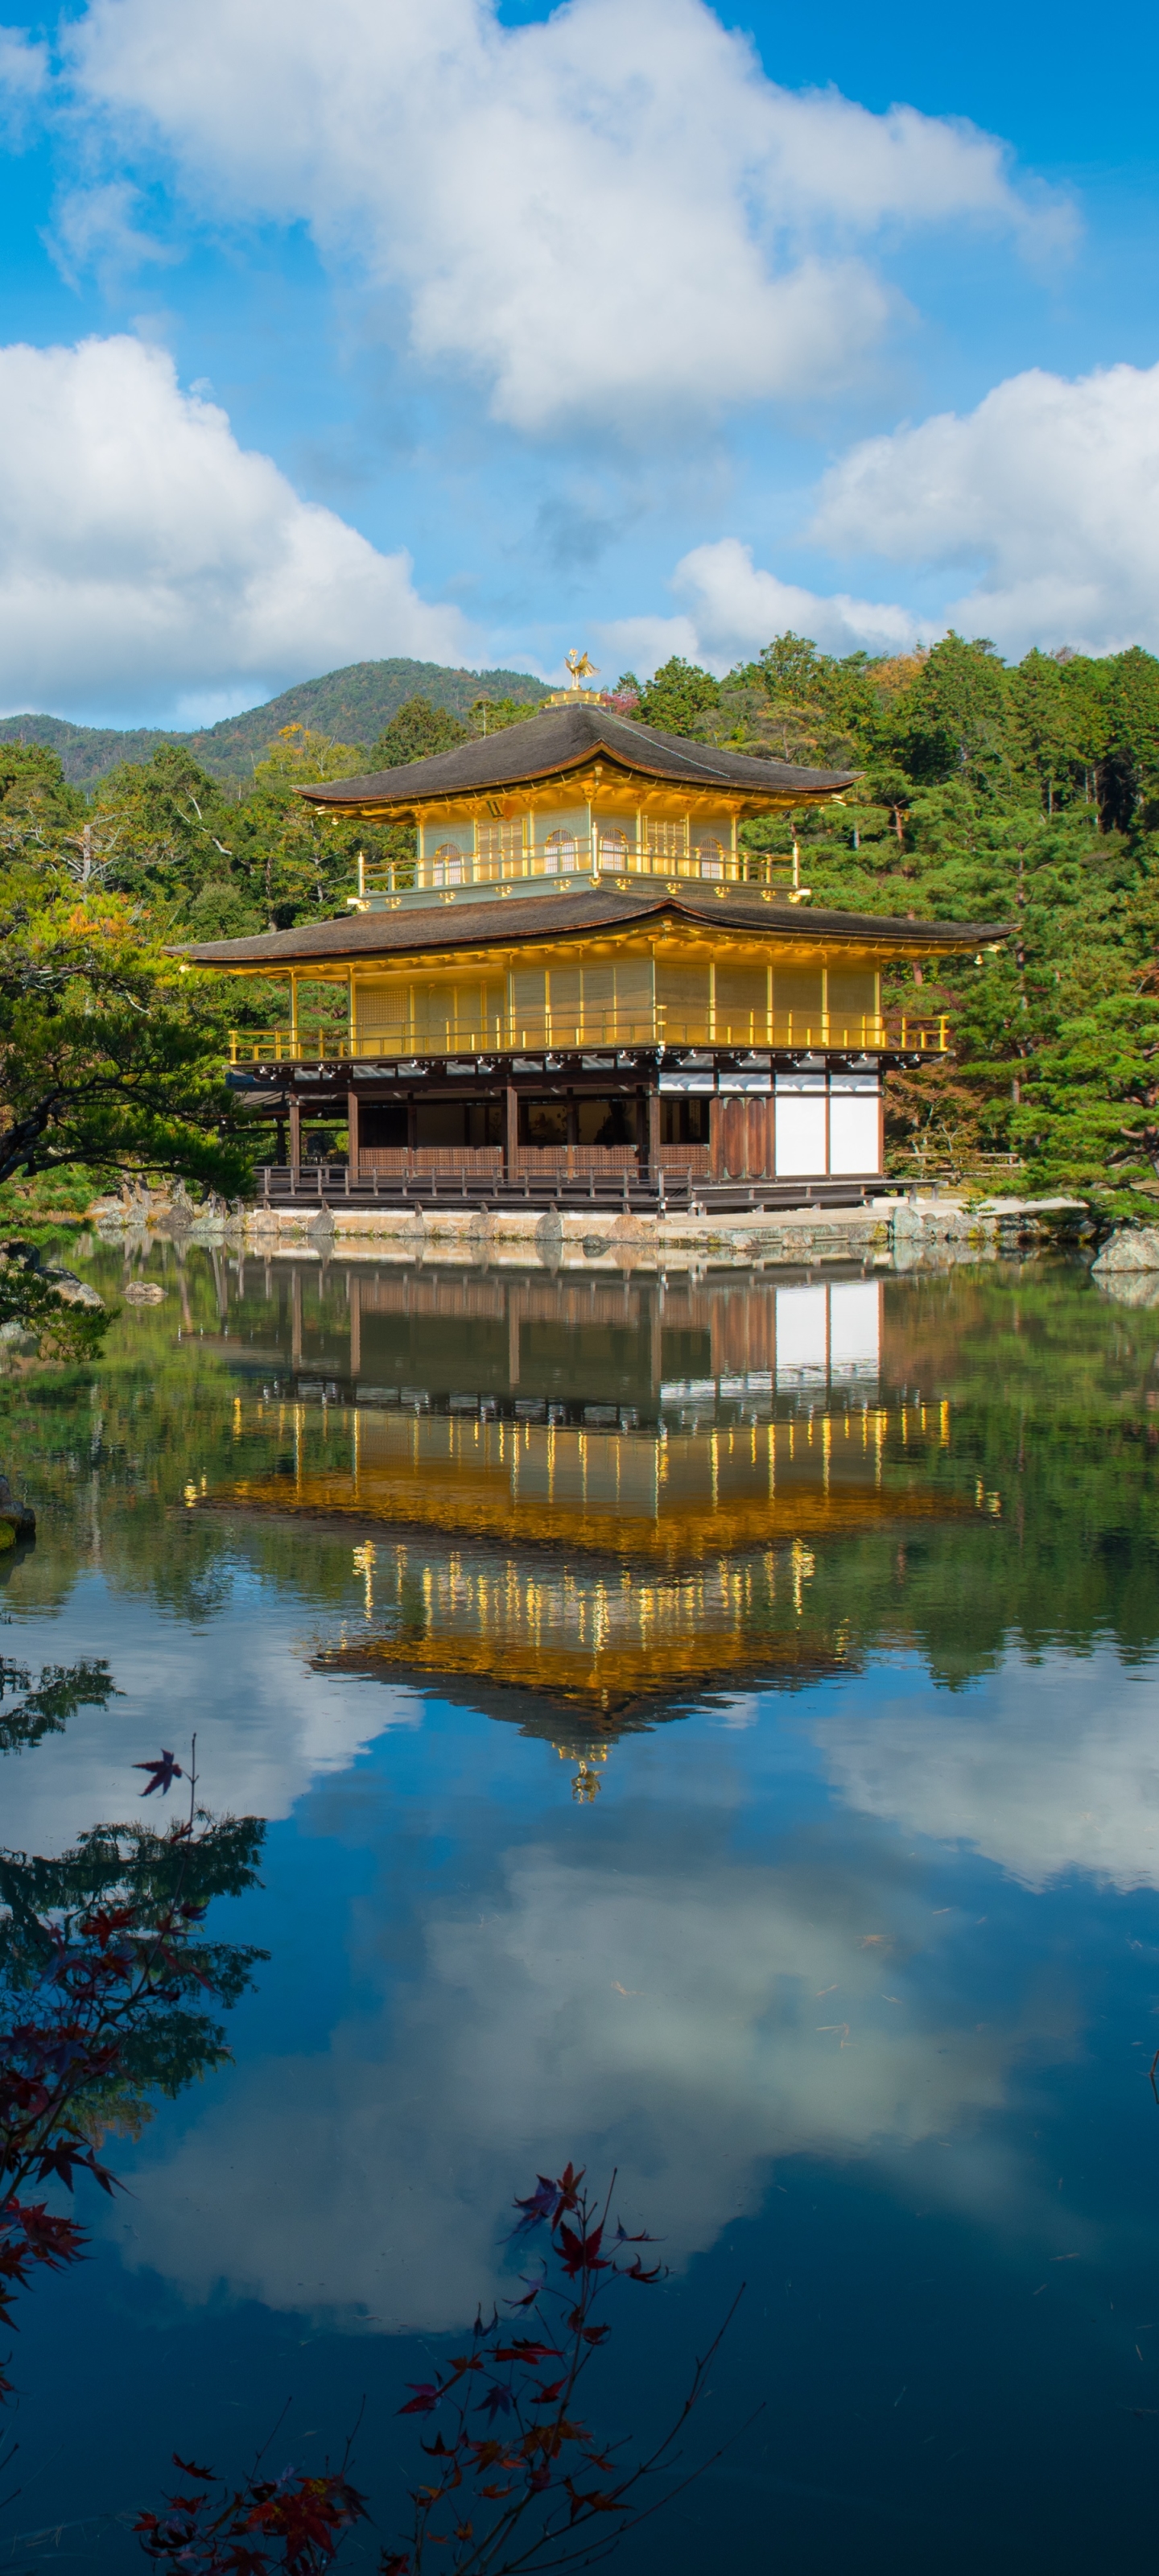 1186427 Hintergrundbild herunterladen religiös, kinkaku ji, kyōto, spiegelung, betrachtung, der tempel des goldenen pavillons, goldener tempel, buddhistischer tempel, japan, tempel - Bildschirmschoner und Bilder kostenlos